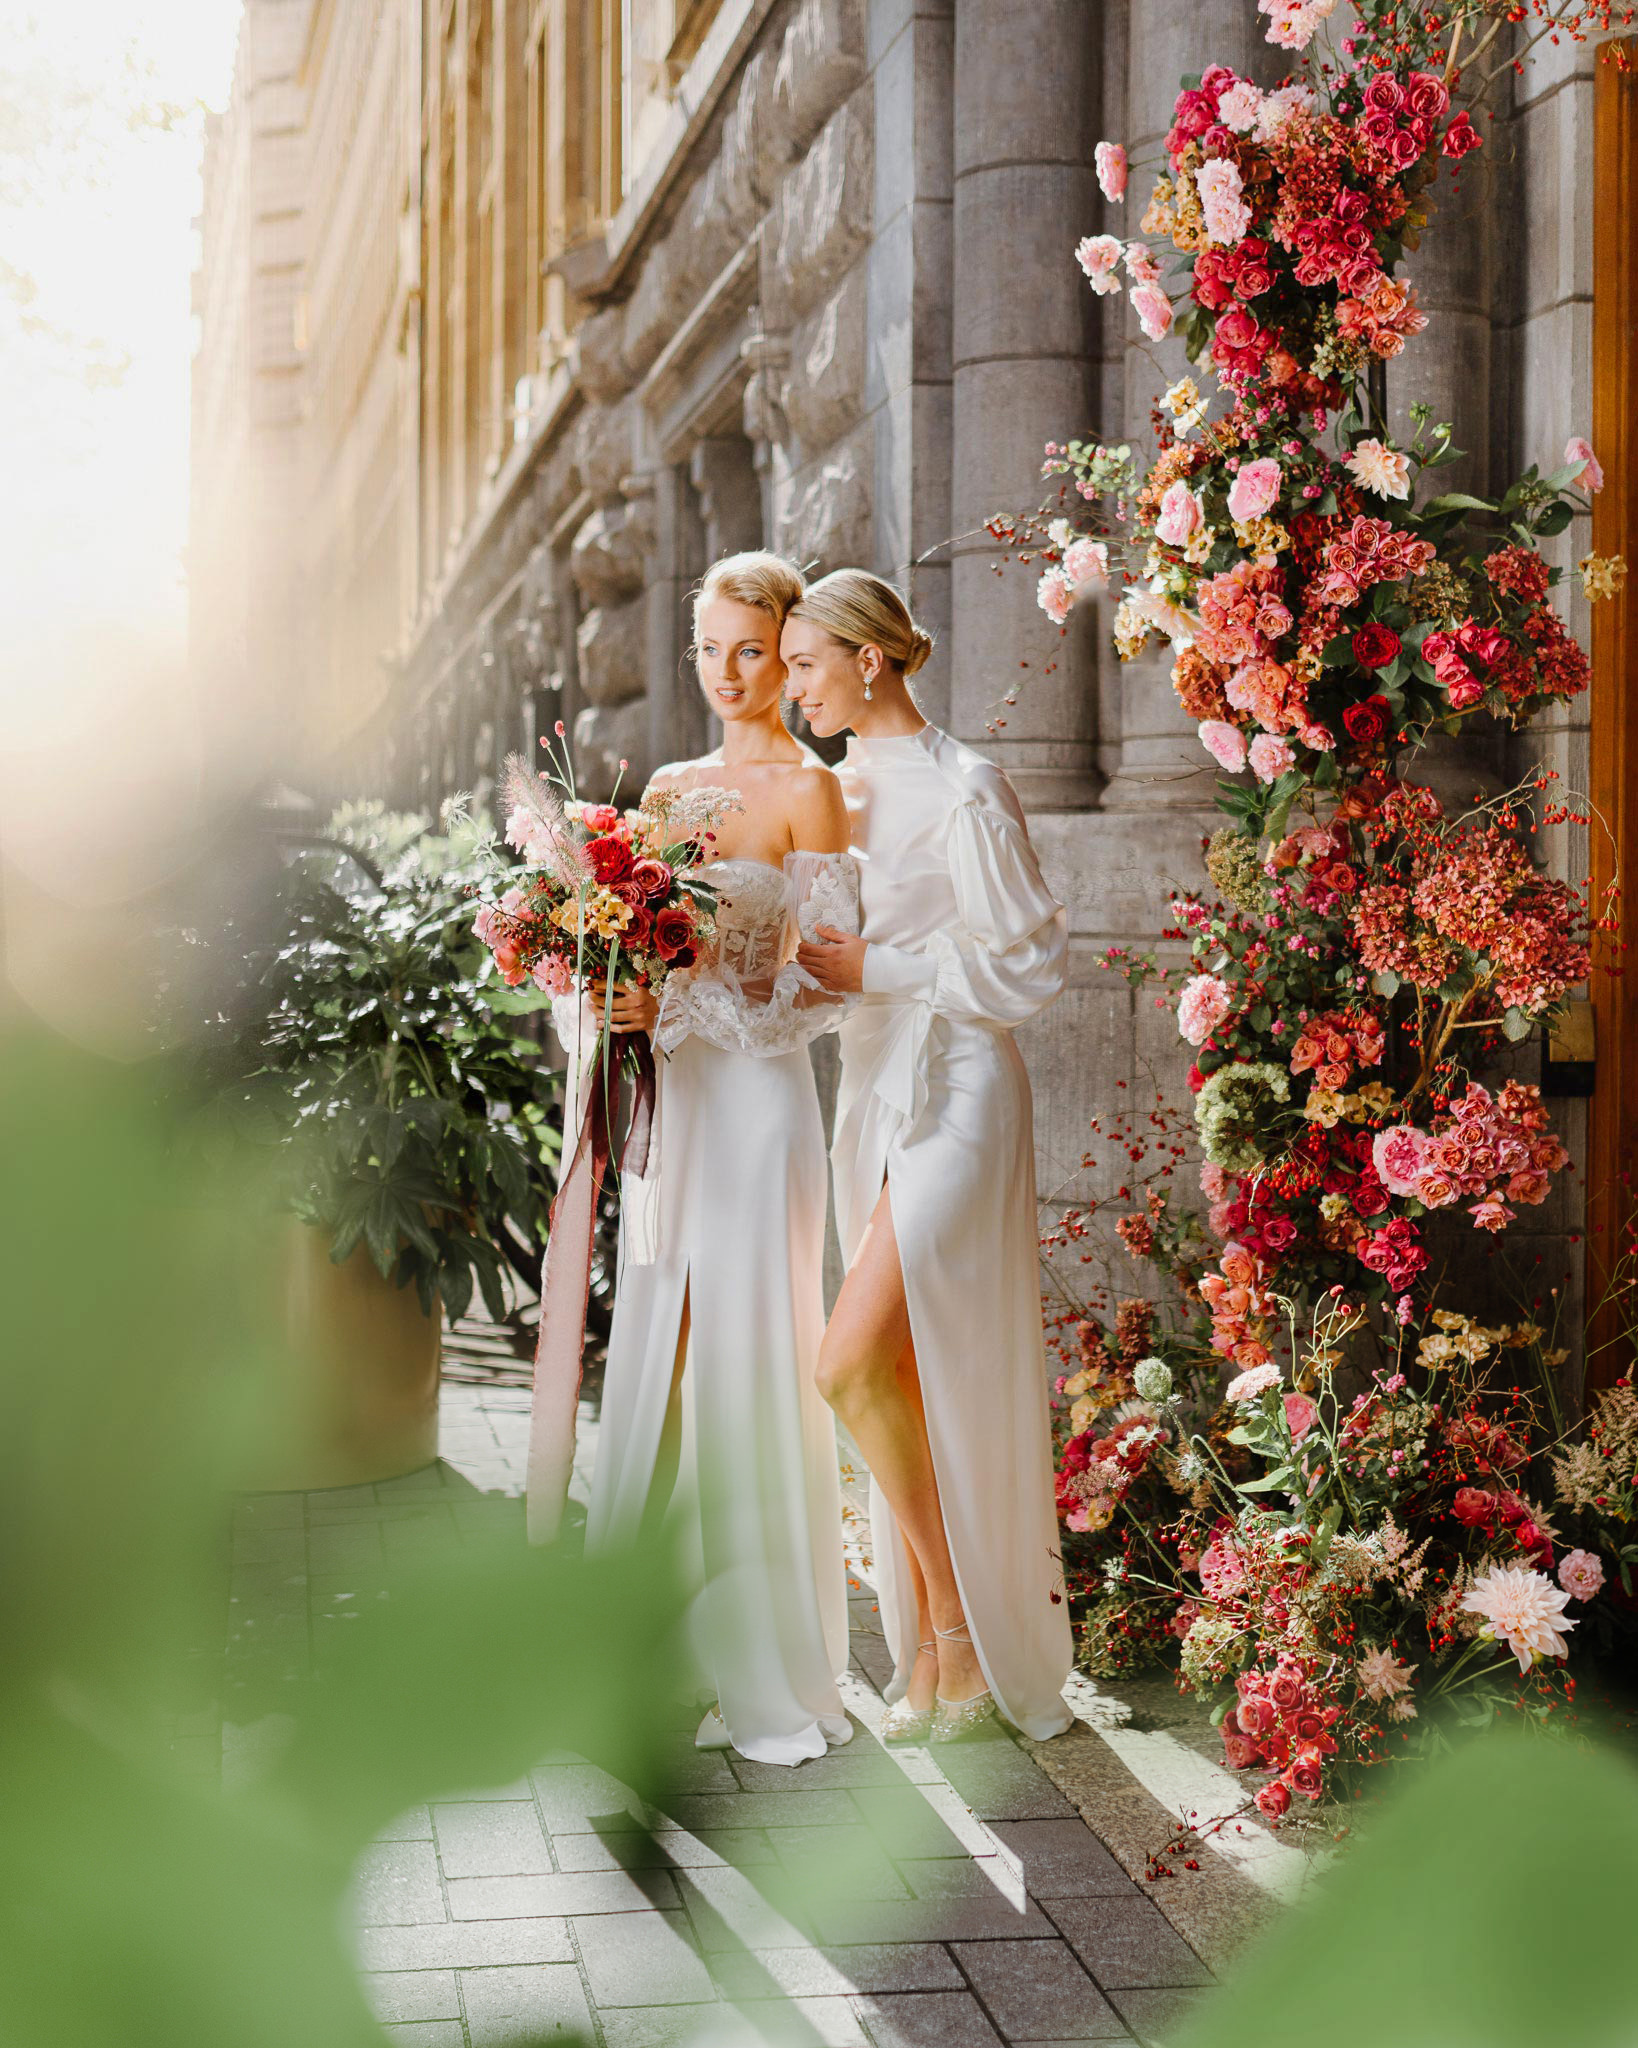 SYM_1482-22-2-bright-vibrant-wedding-preset-NewGold-amsterdam-photographer